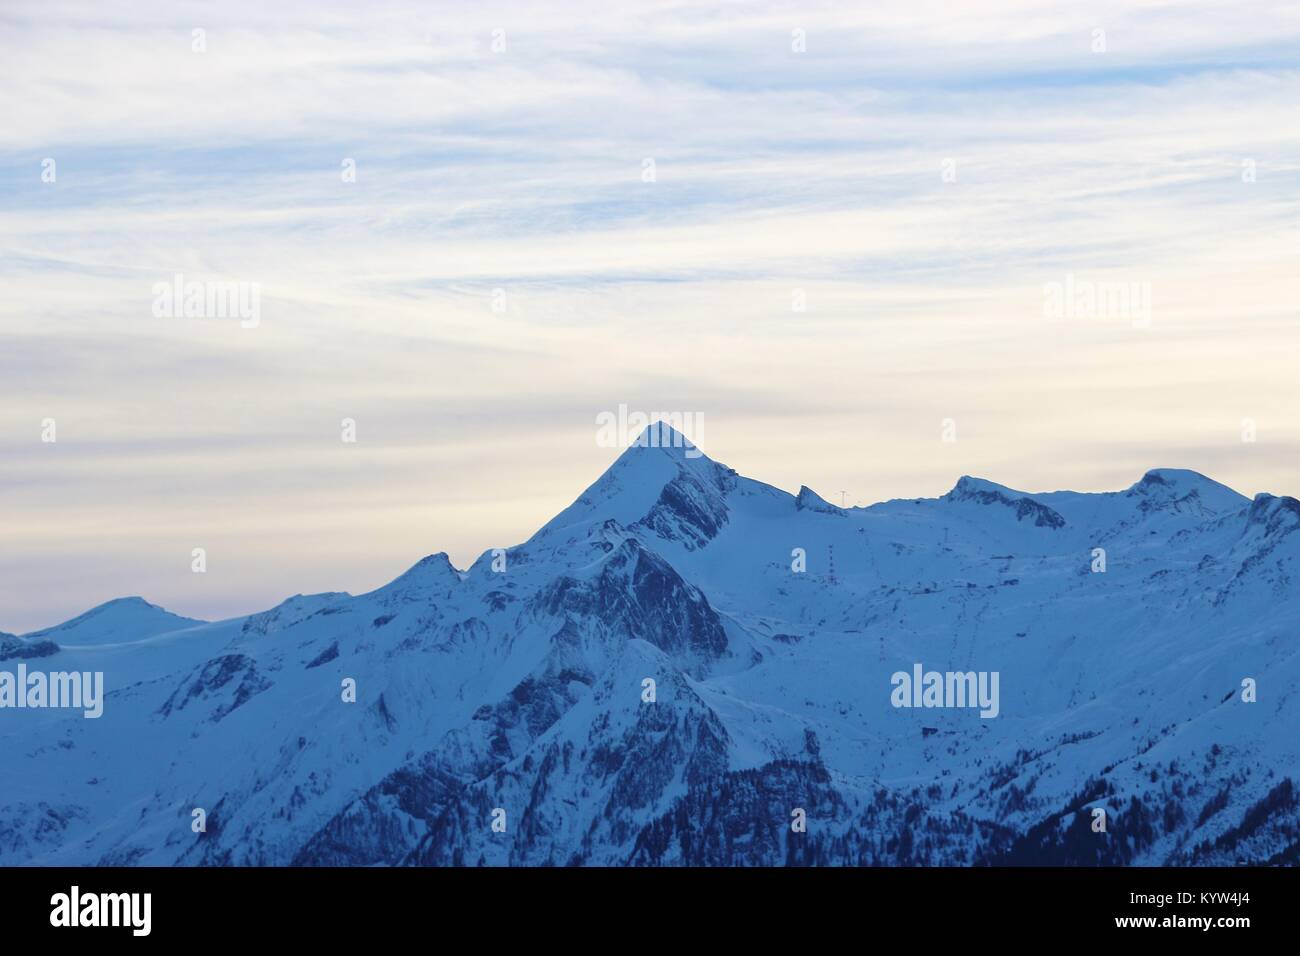 View of the Hohe Tauern mountain range with mountain Kitzsteinhorn (3200 m) in the region Zell am See - Kaprun, in winter. Austria, Europe. Stock Photo